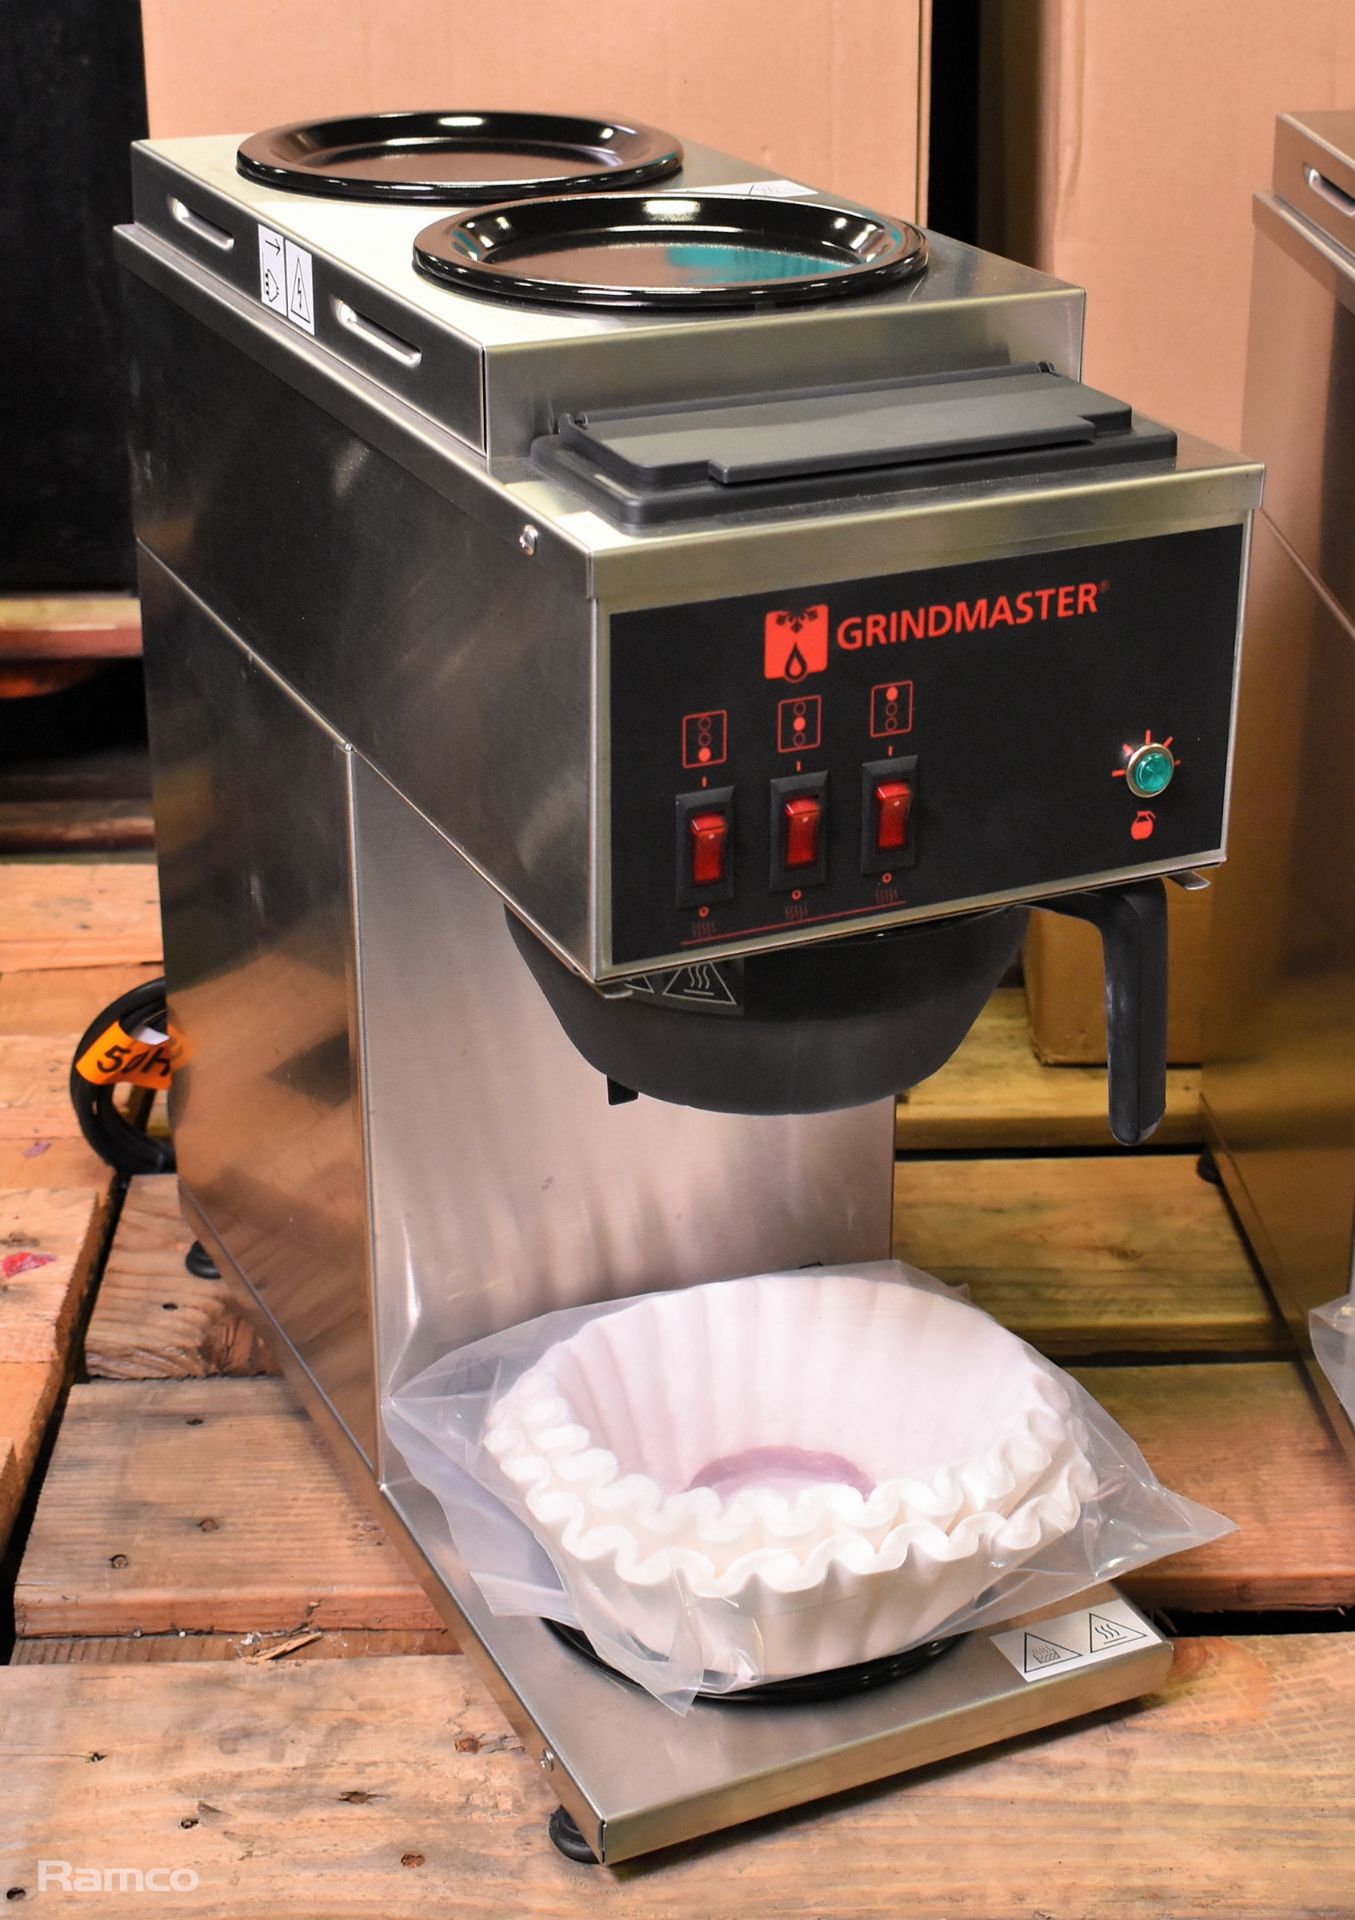 Grindmaster CP03UK coffee brewer